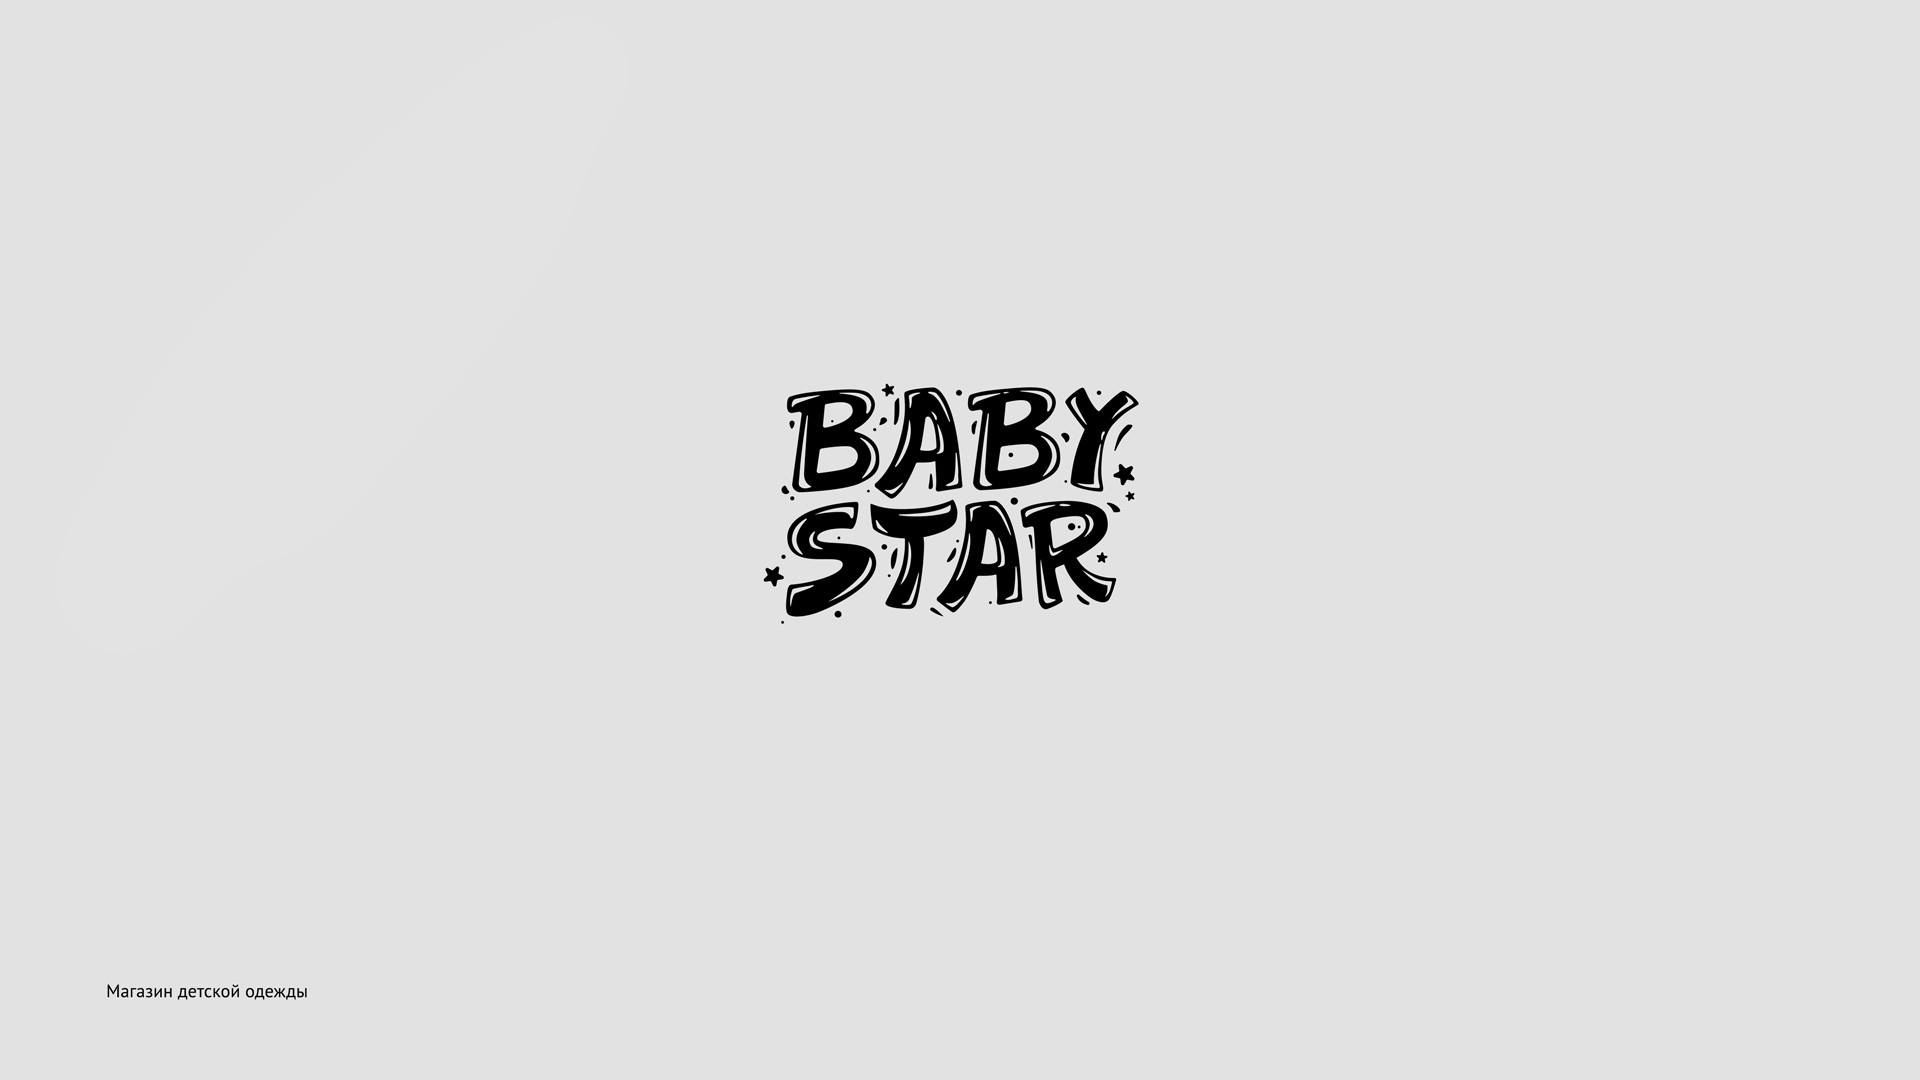 Baby star